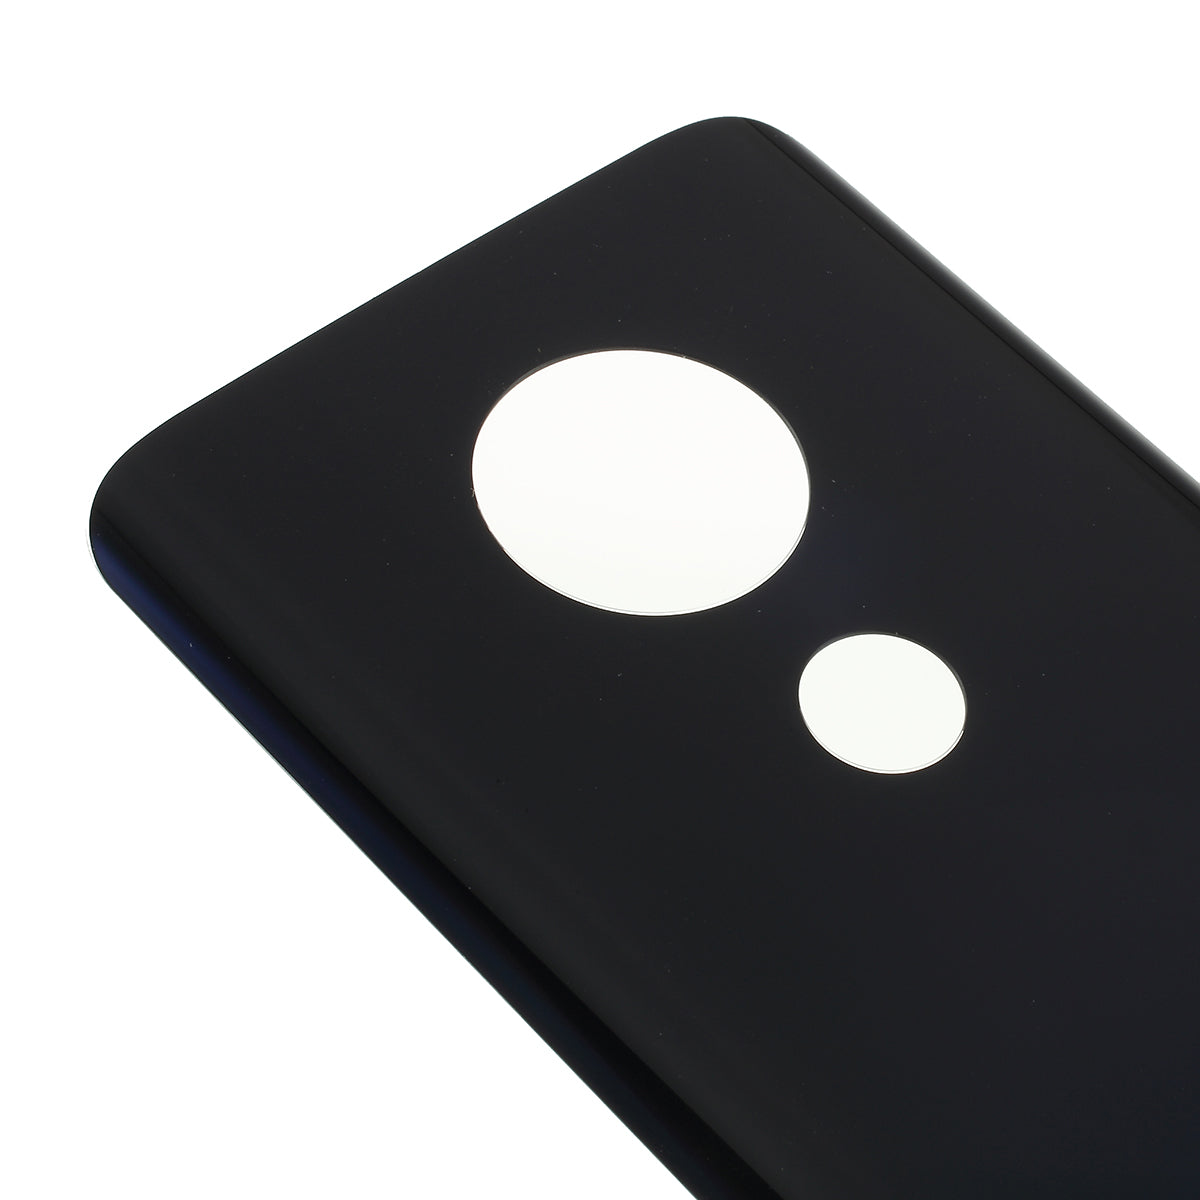 For Motorola Moto G7 Plus Battery Housing Door Cover Part (without Logo) - Black